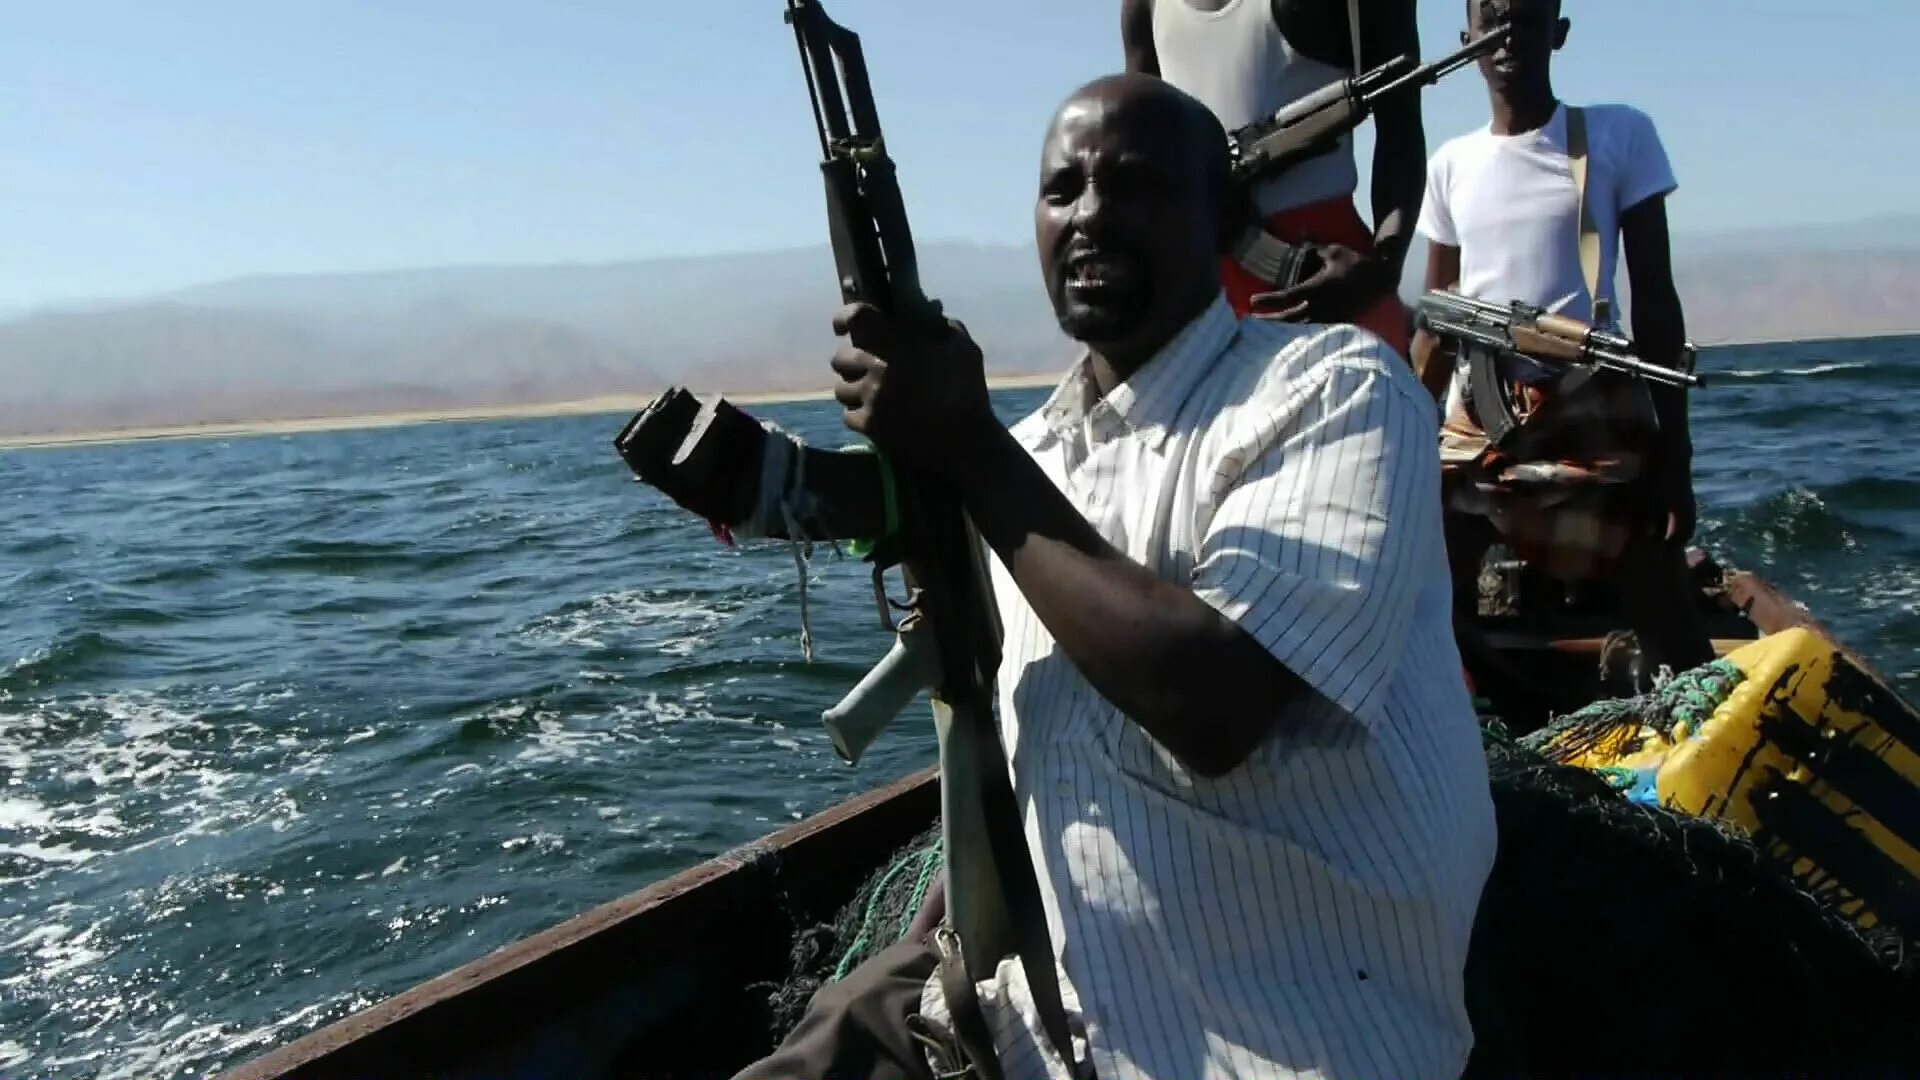 Пираты 21 века Сомали. Сомалийские пираты 2020. Сомалийские пираты Карибского моря. Сомалийские пираты 2008. Украли судно